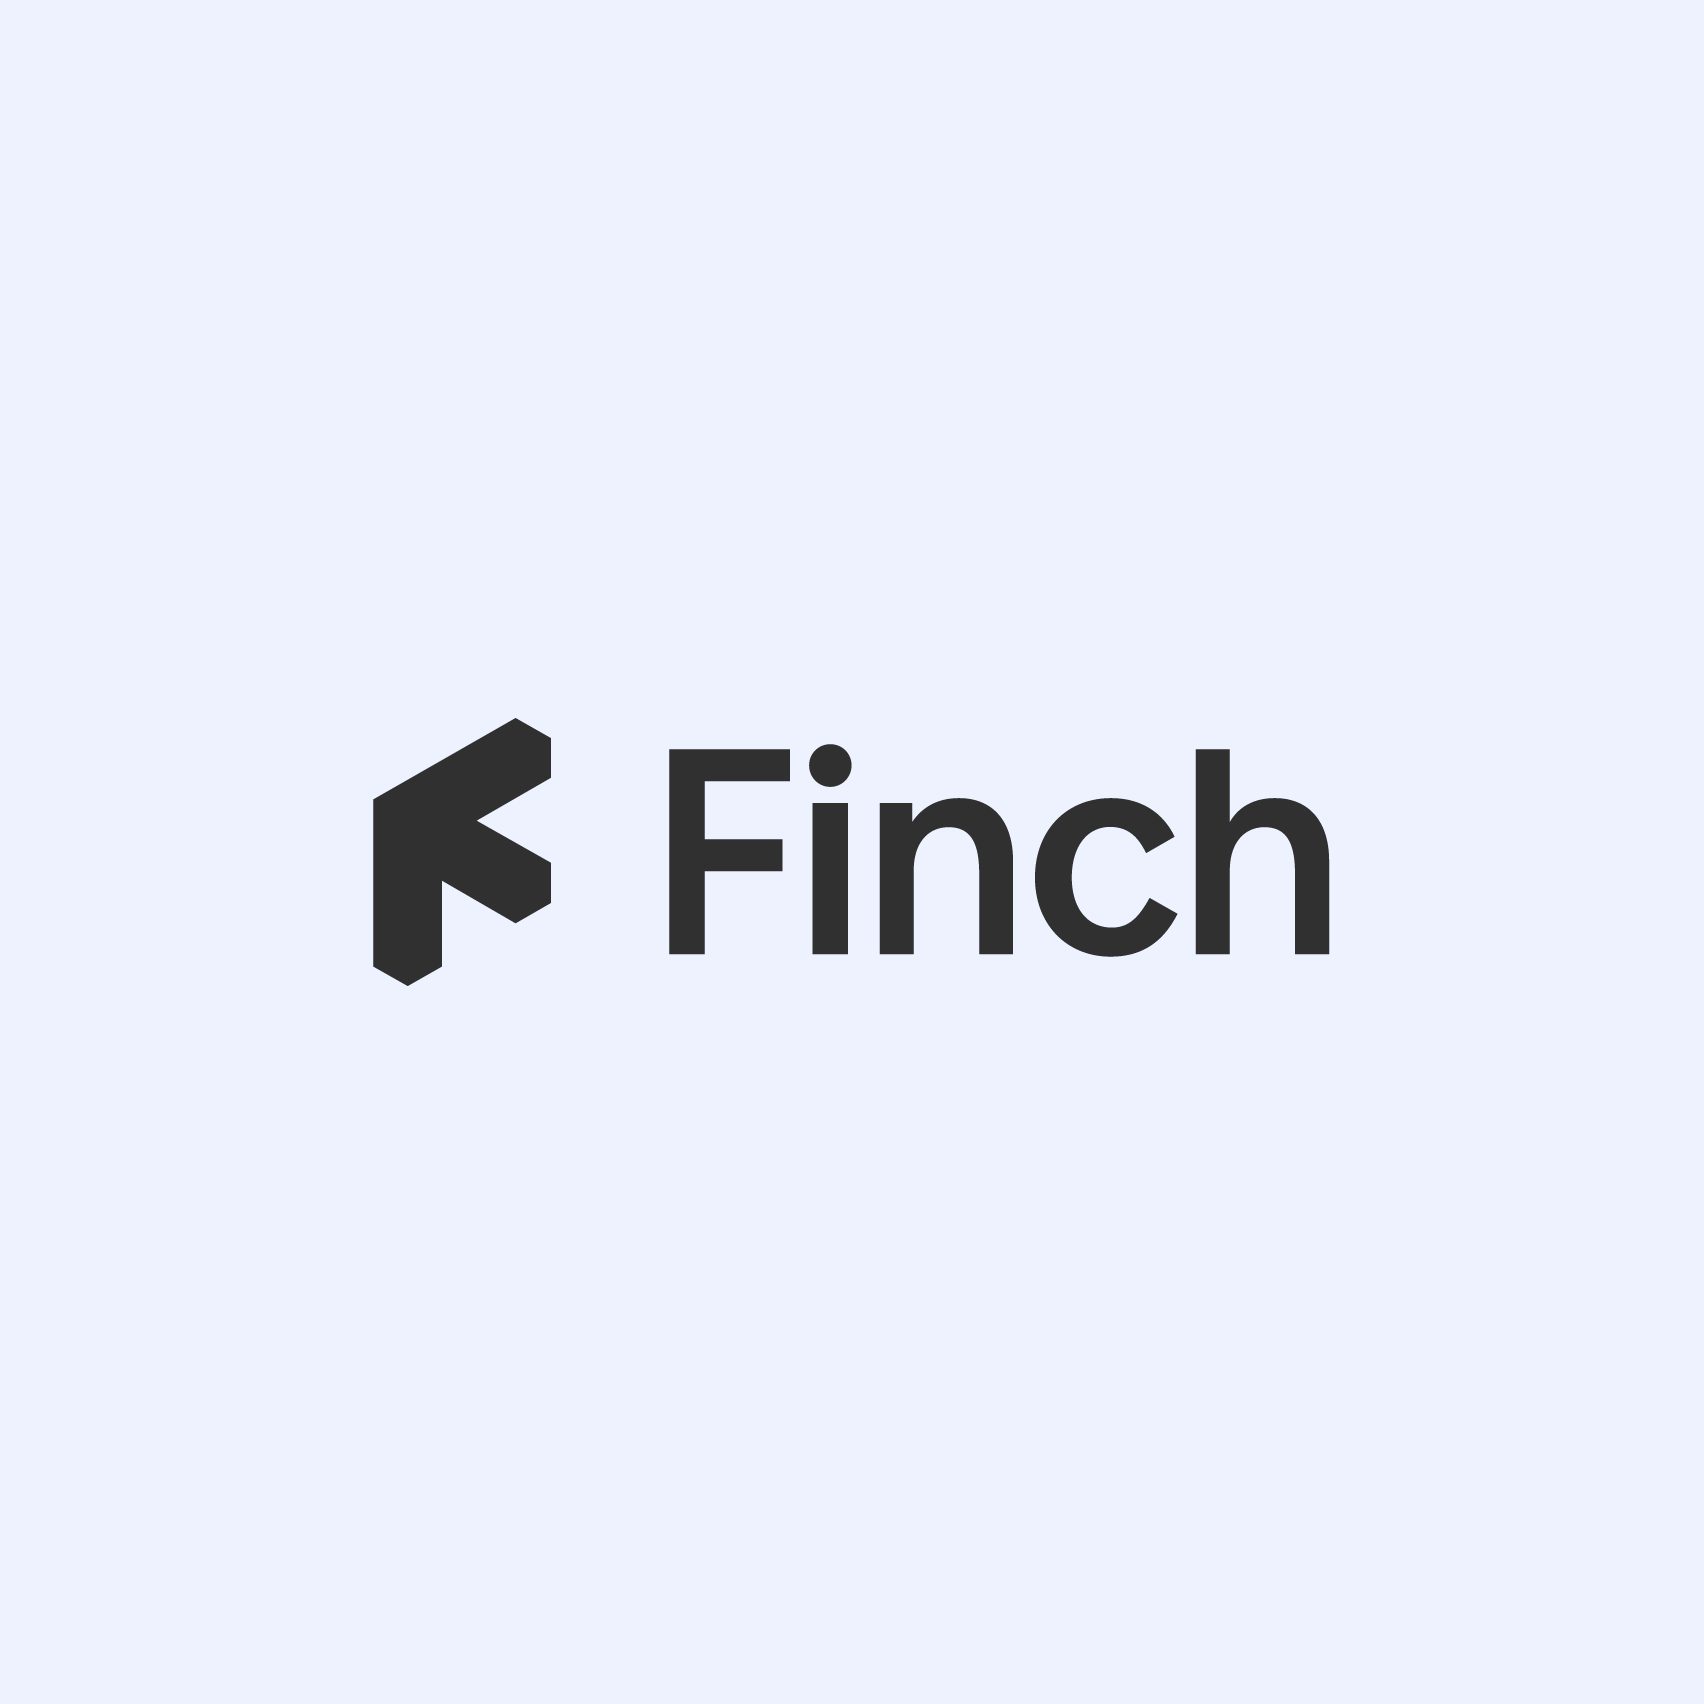 Finch3D logo